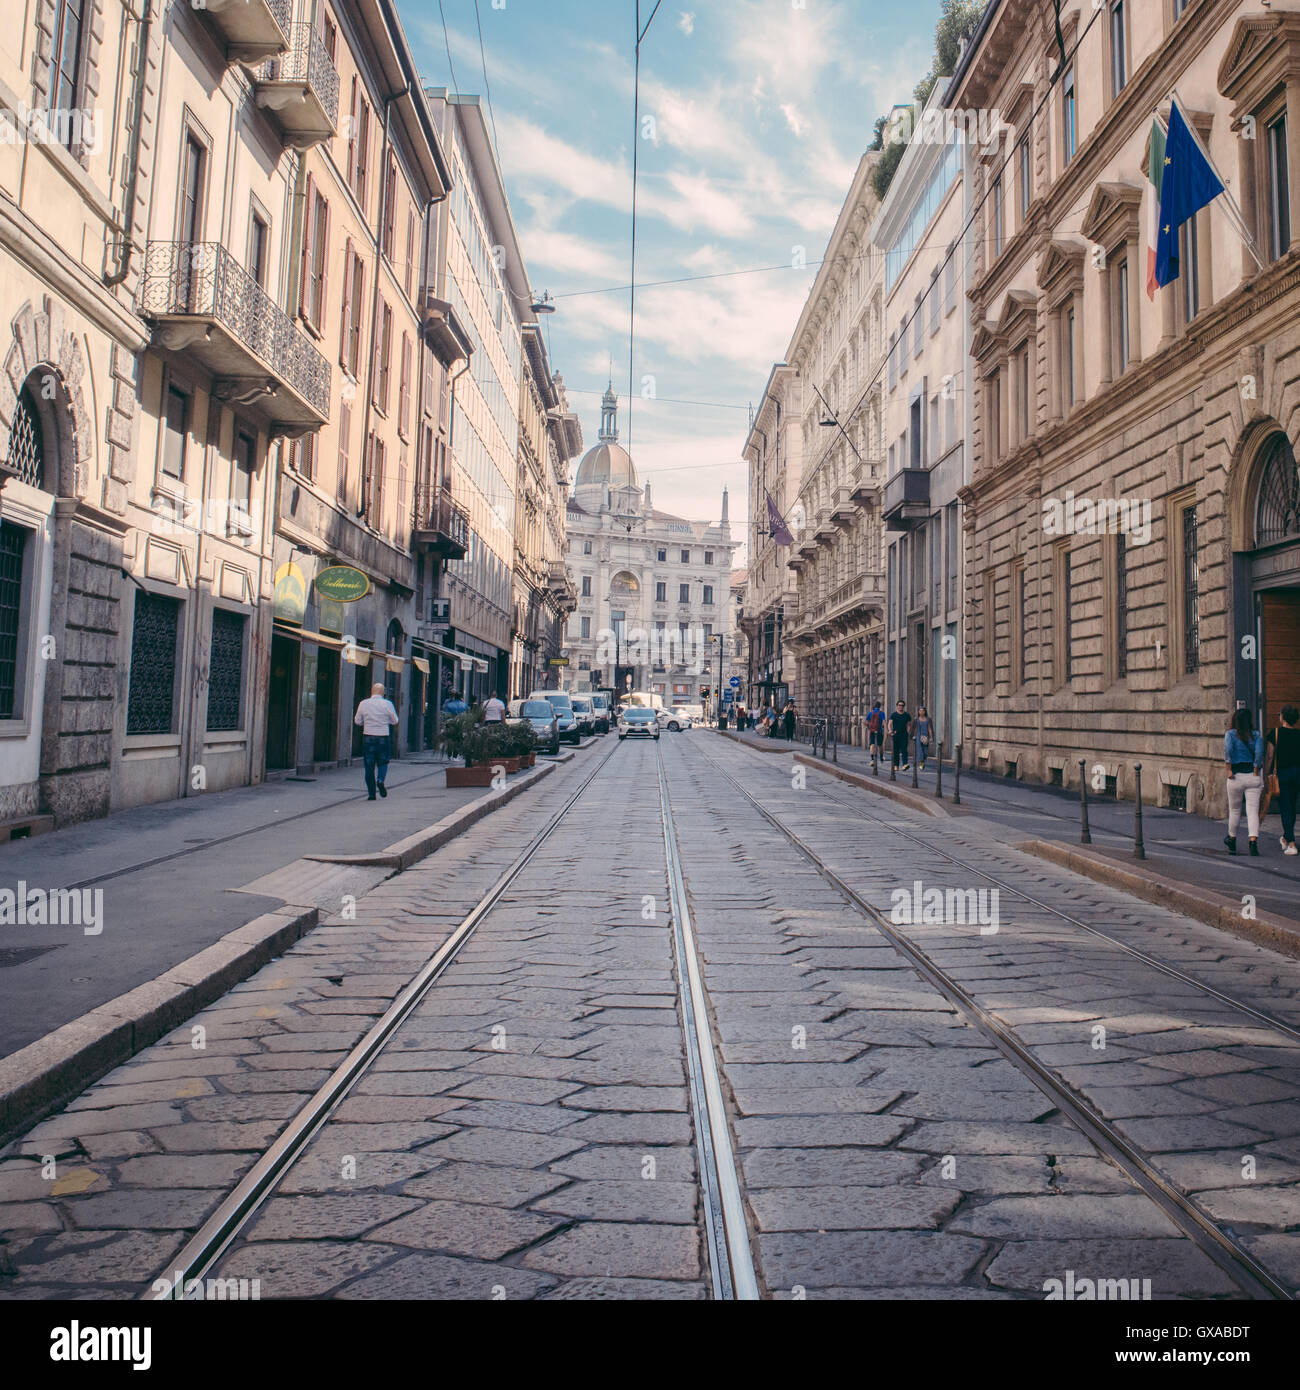 Narrow street in Milan, Italy with tram tracks and cobblestones Stock Photo